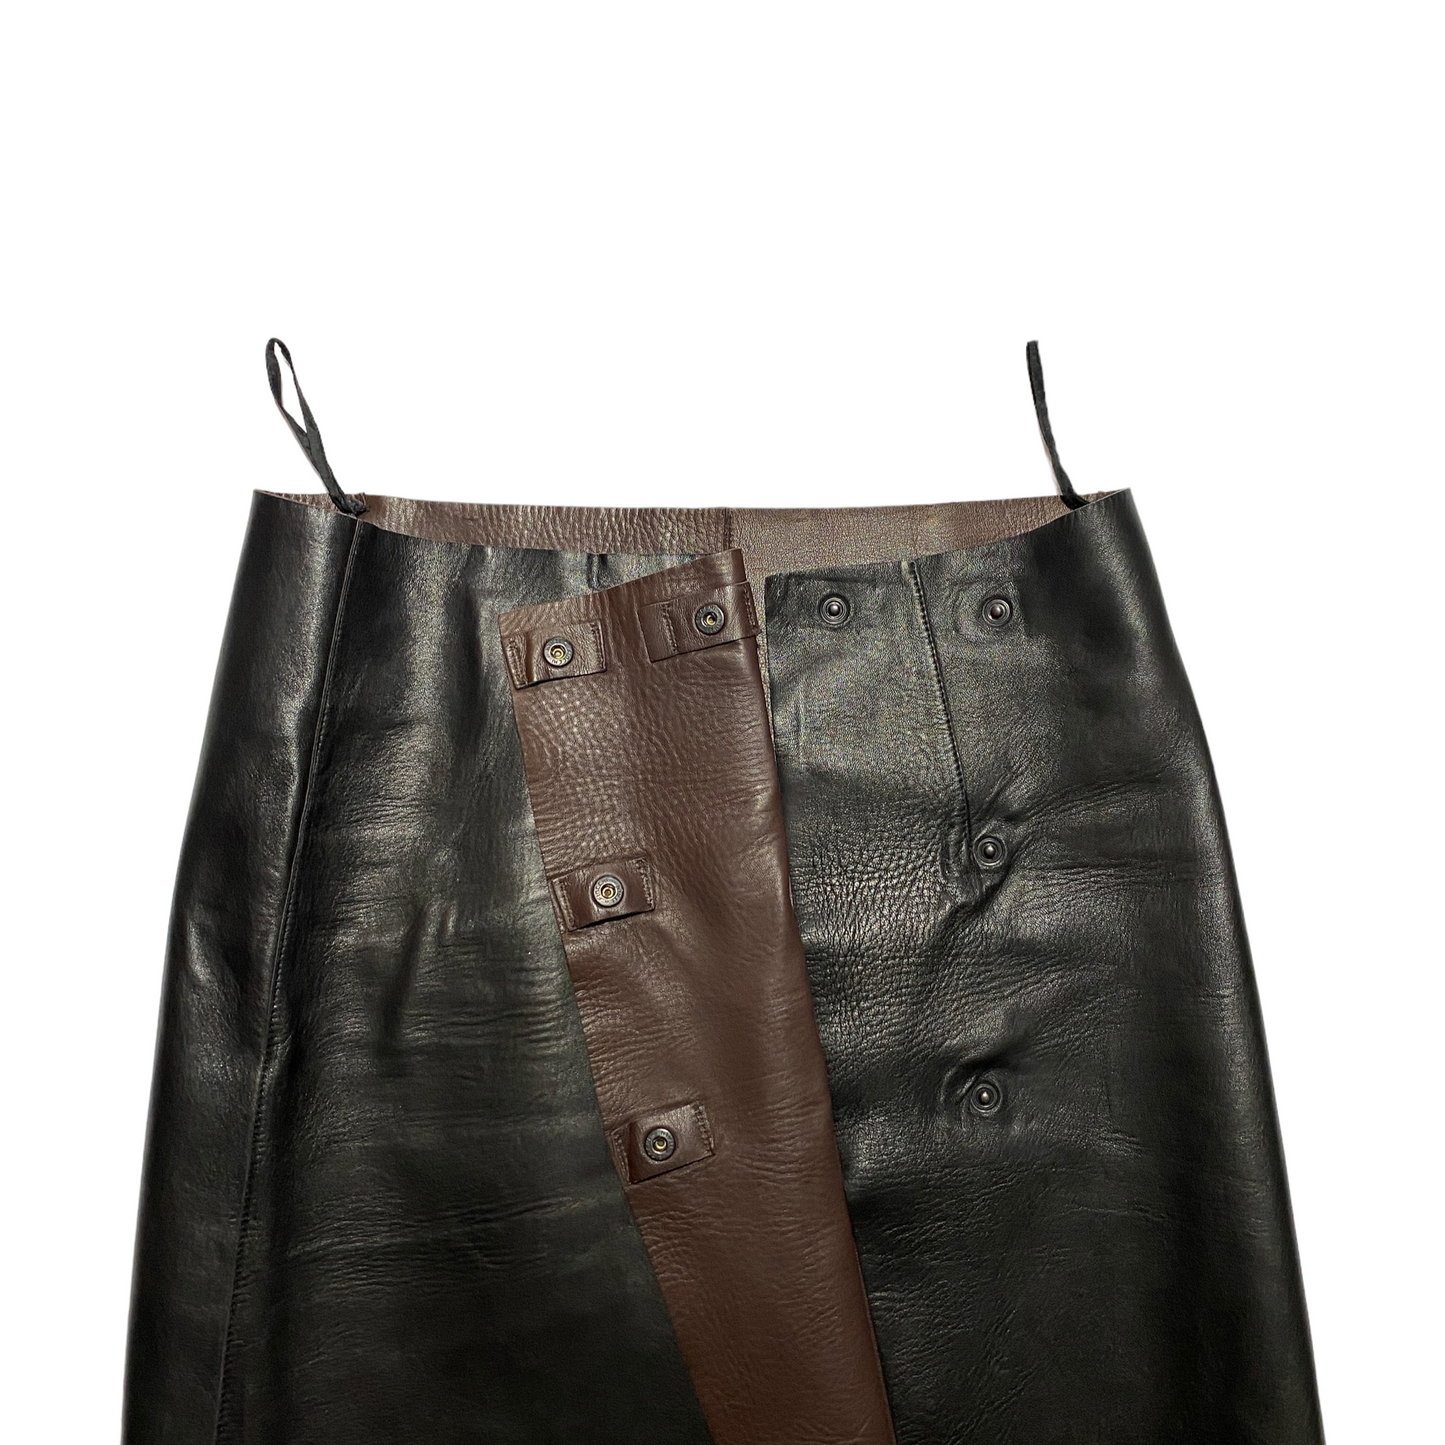 00's Jil Sander Leather Knee Skirt (37W)